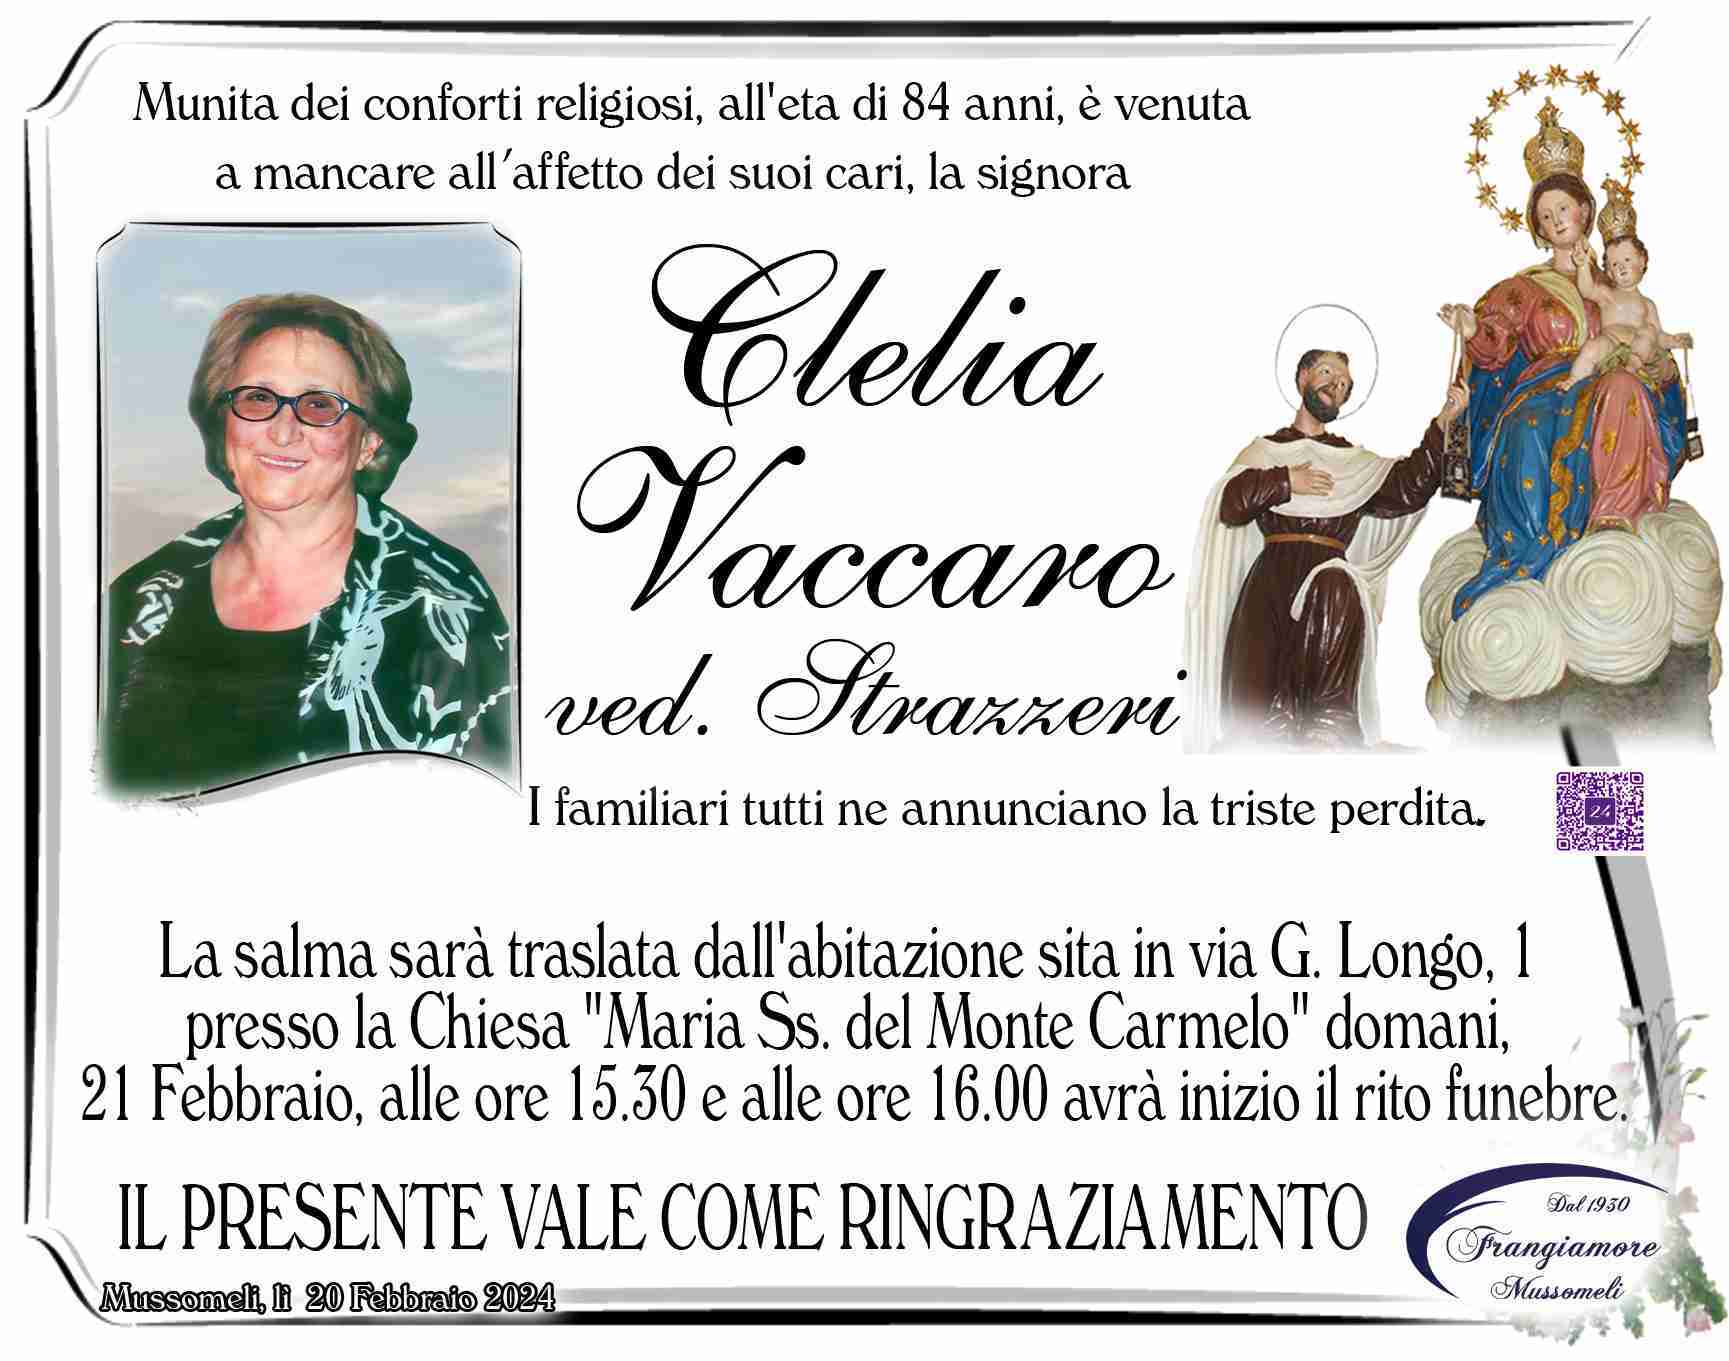 Clelia Vaccaro